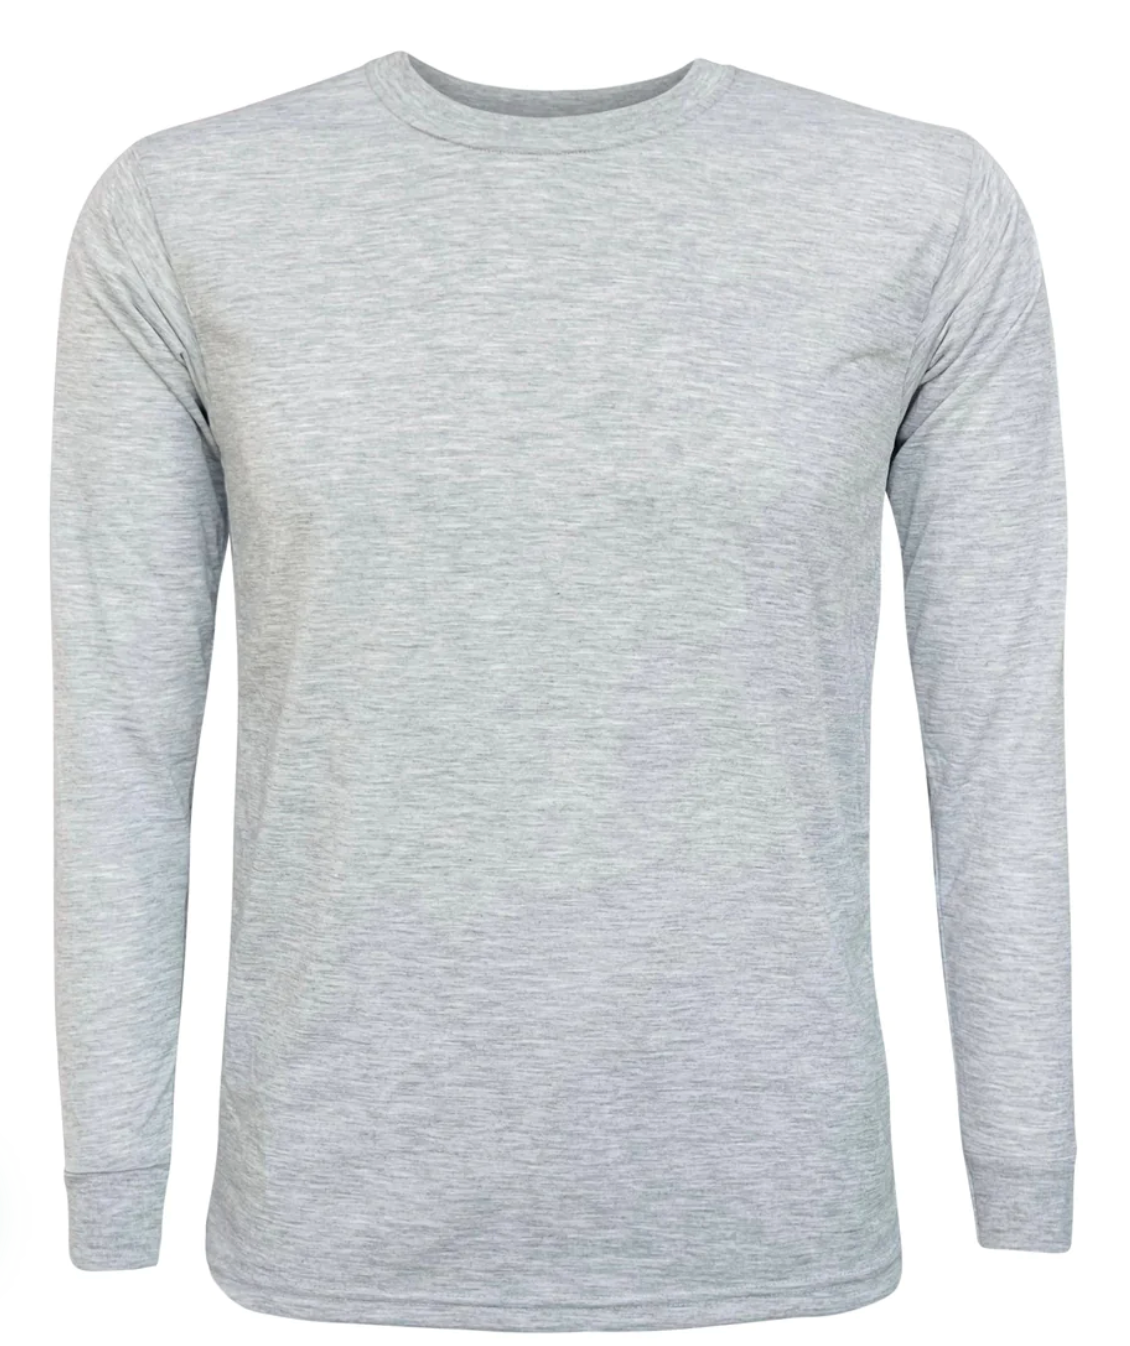 Sublimation 100% Polyester Grey Sublimation Sweatshirt Soft Cotton